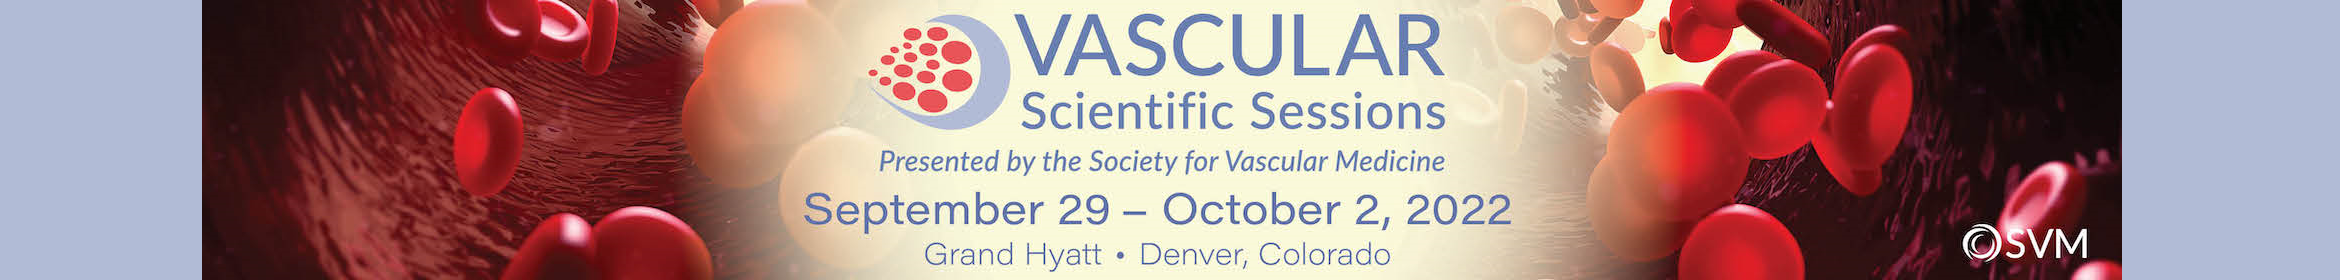 SVM 2022 Vascular Scientific Sessions Main banner